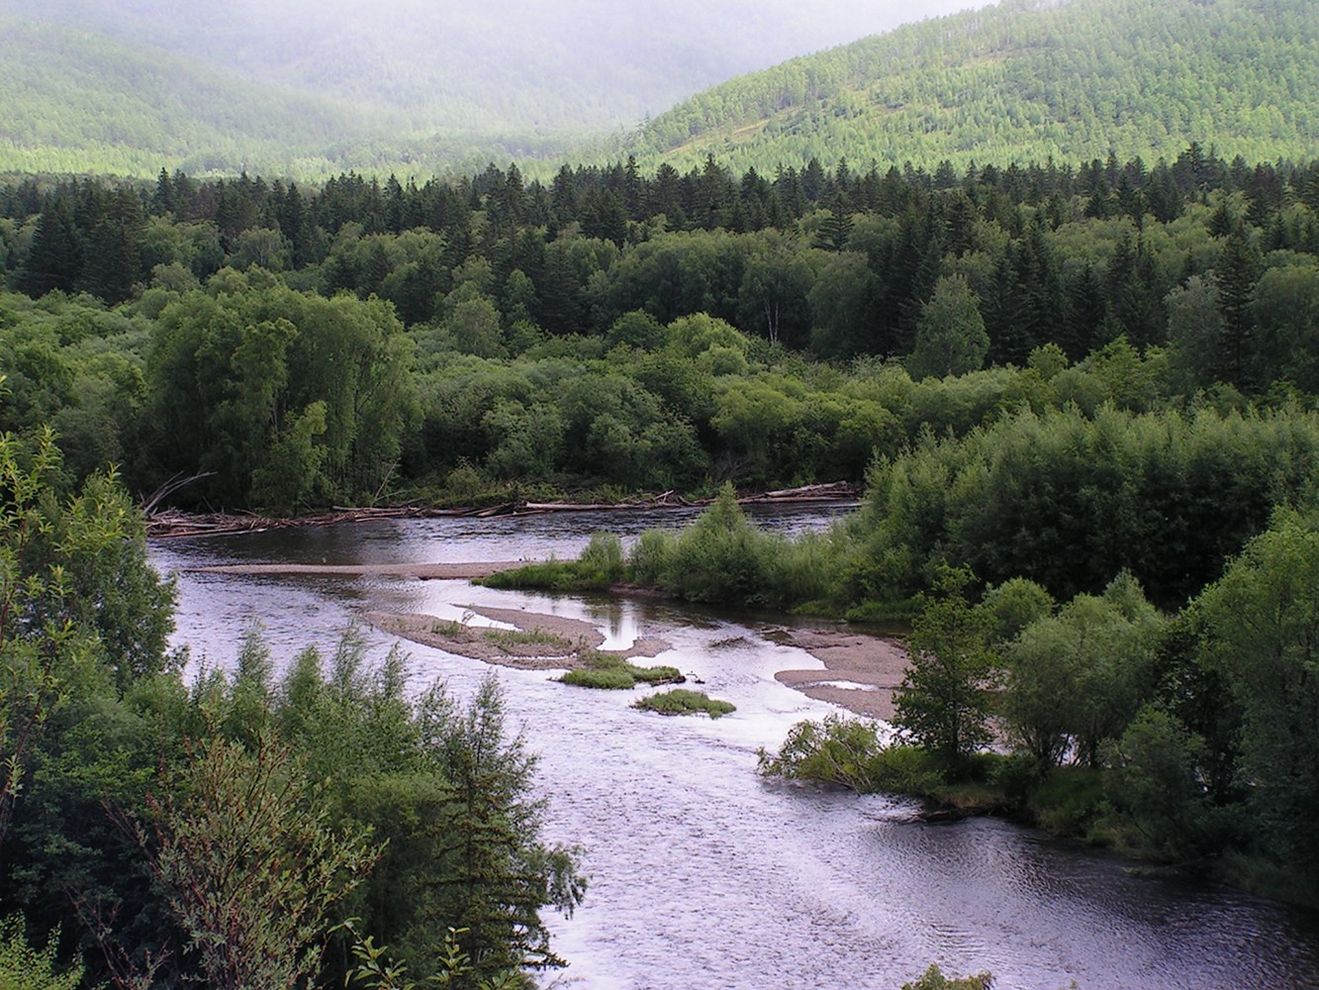 Тумнин, image of landscape/habitat.